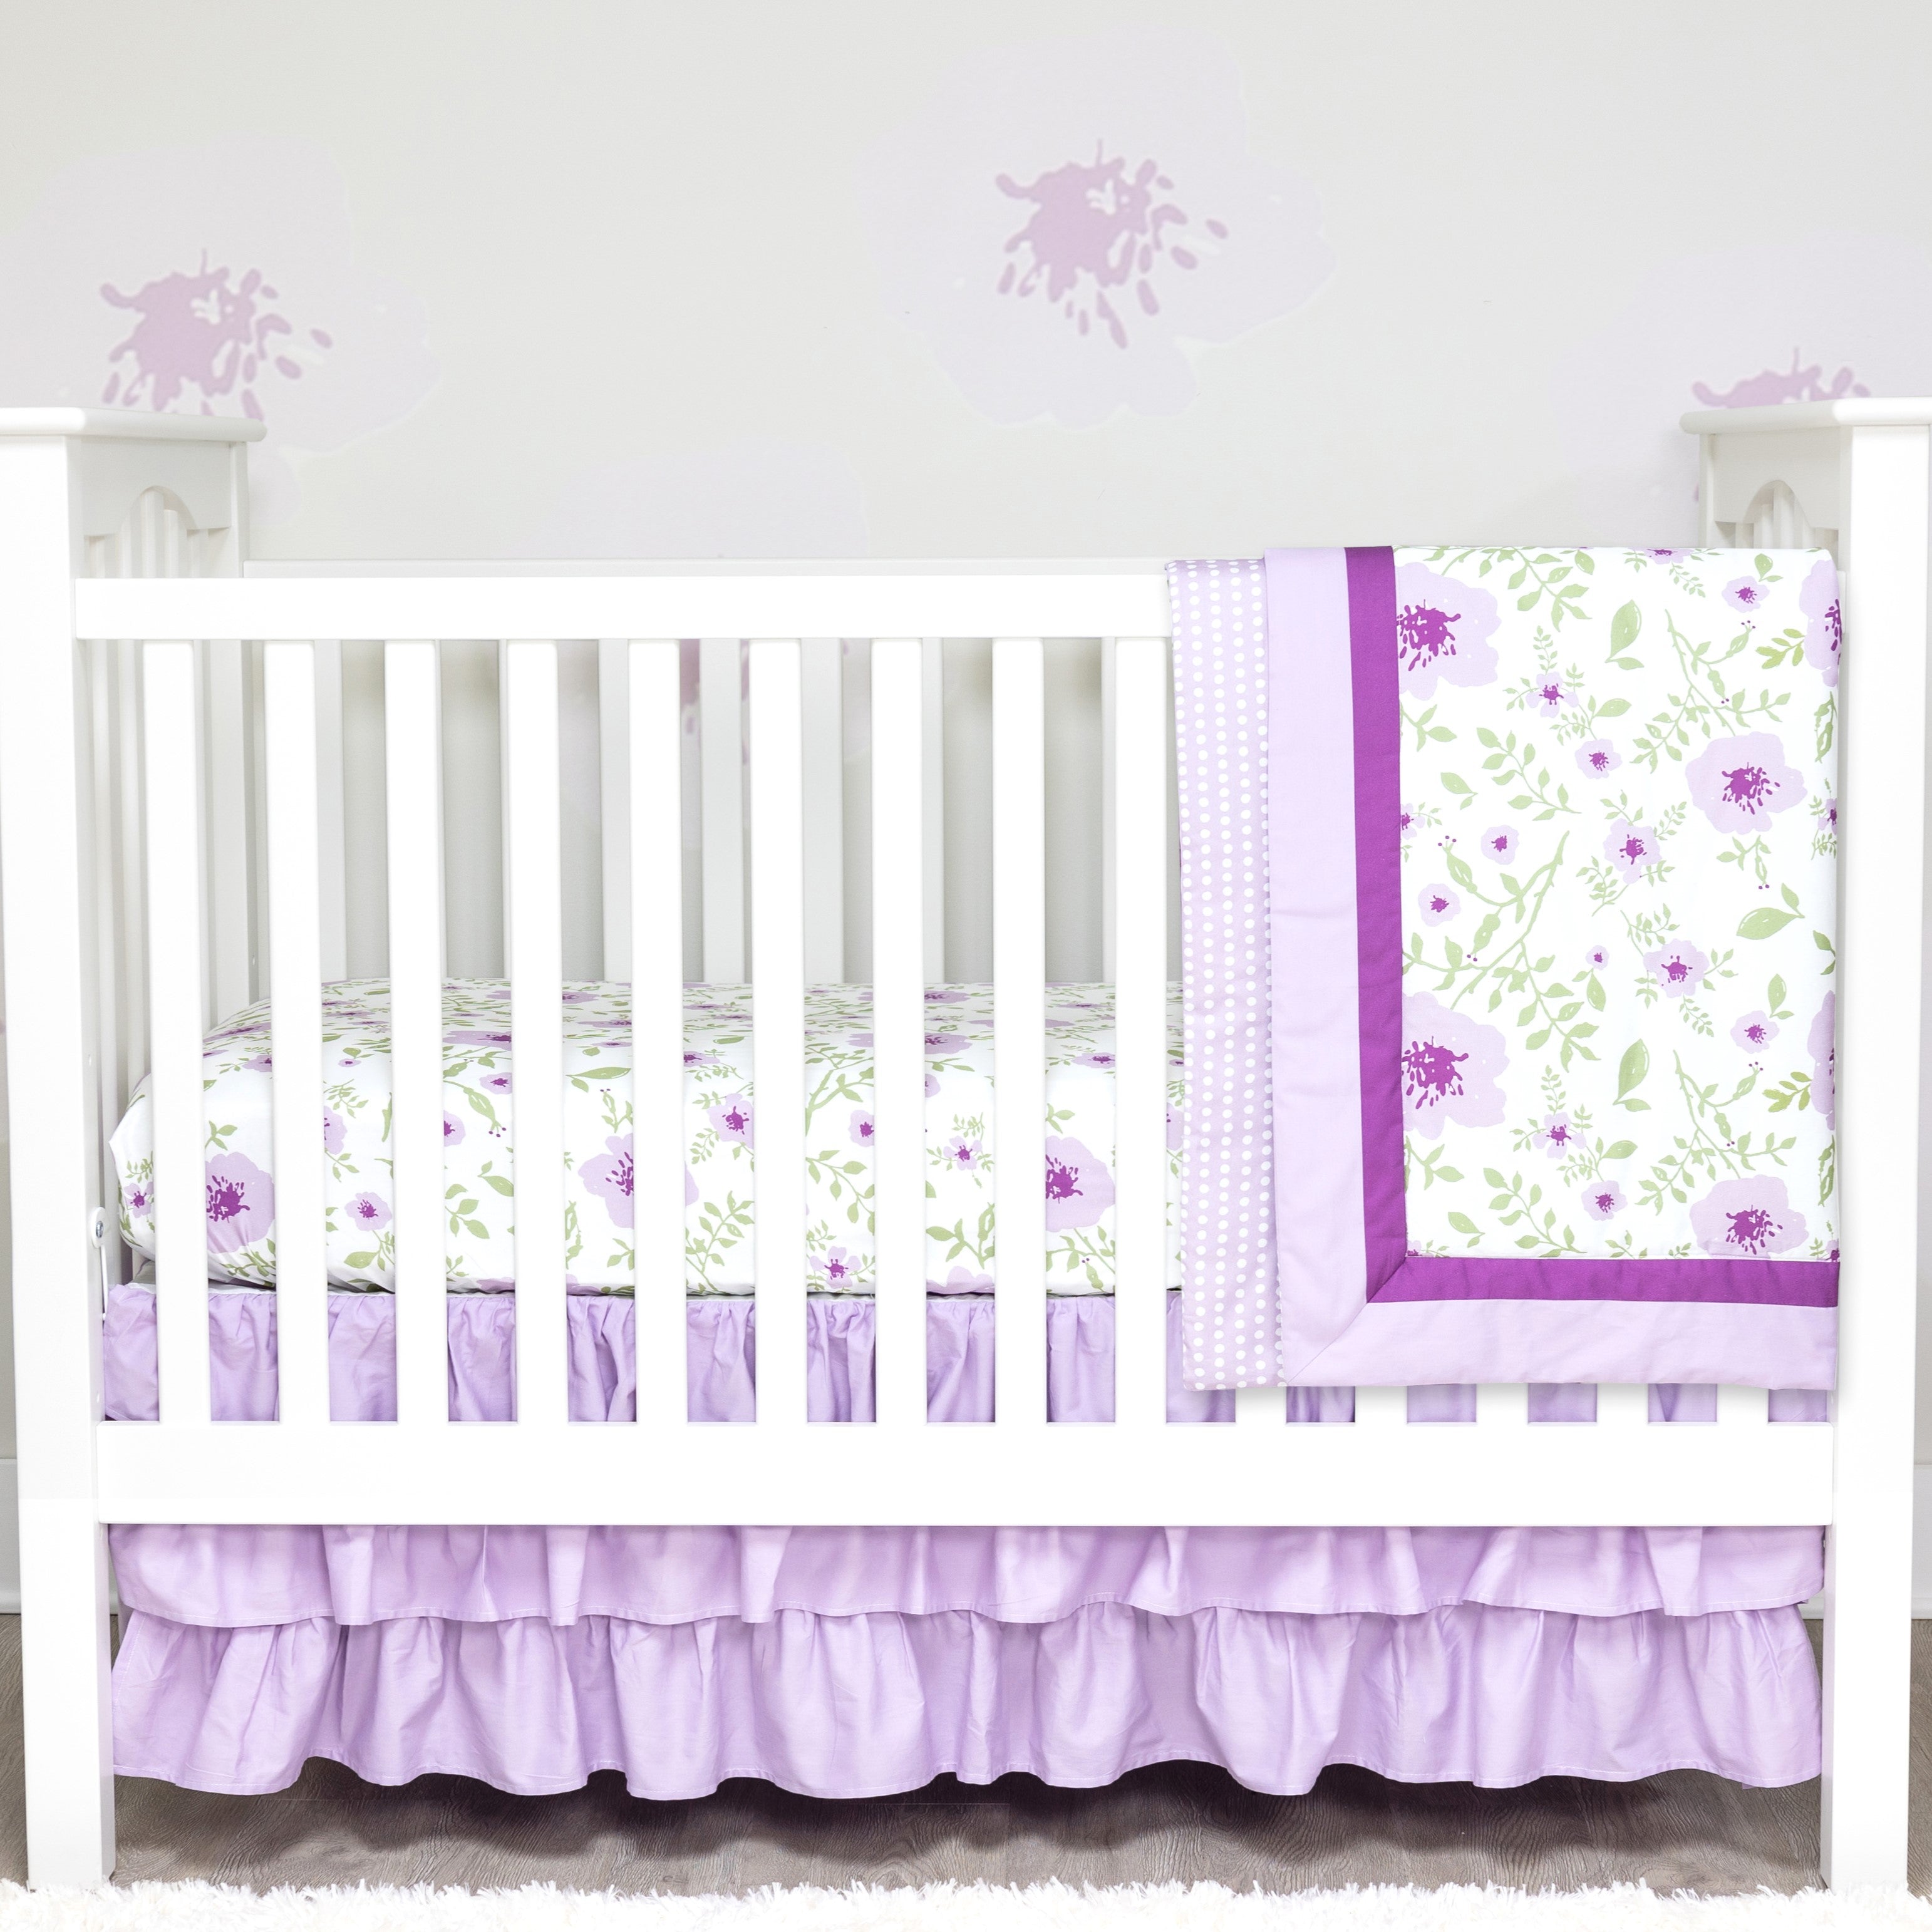 3 Piece Crib Bedding Sets Starting at $49.99 – CribBeddingSets.com